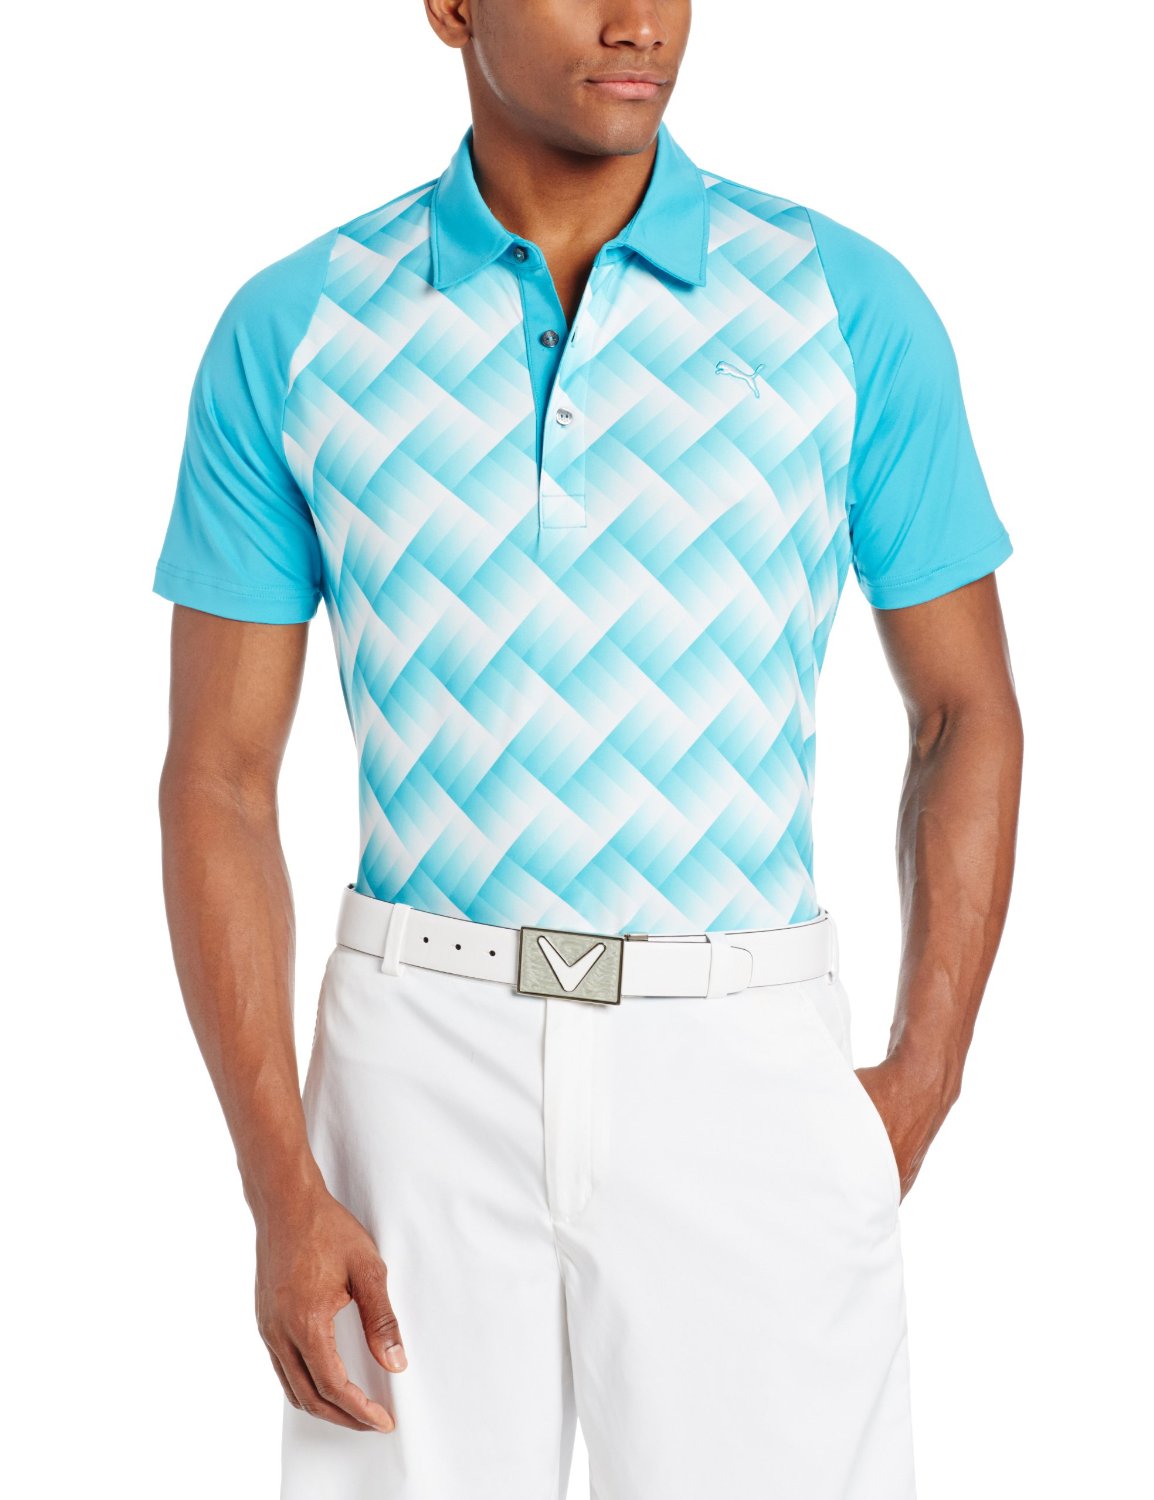 Puma NA DS Graphic Tech Golf Polo Shirts